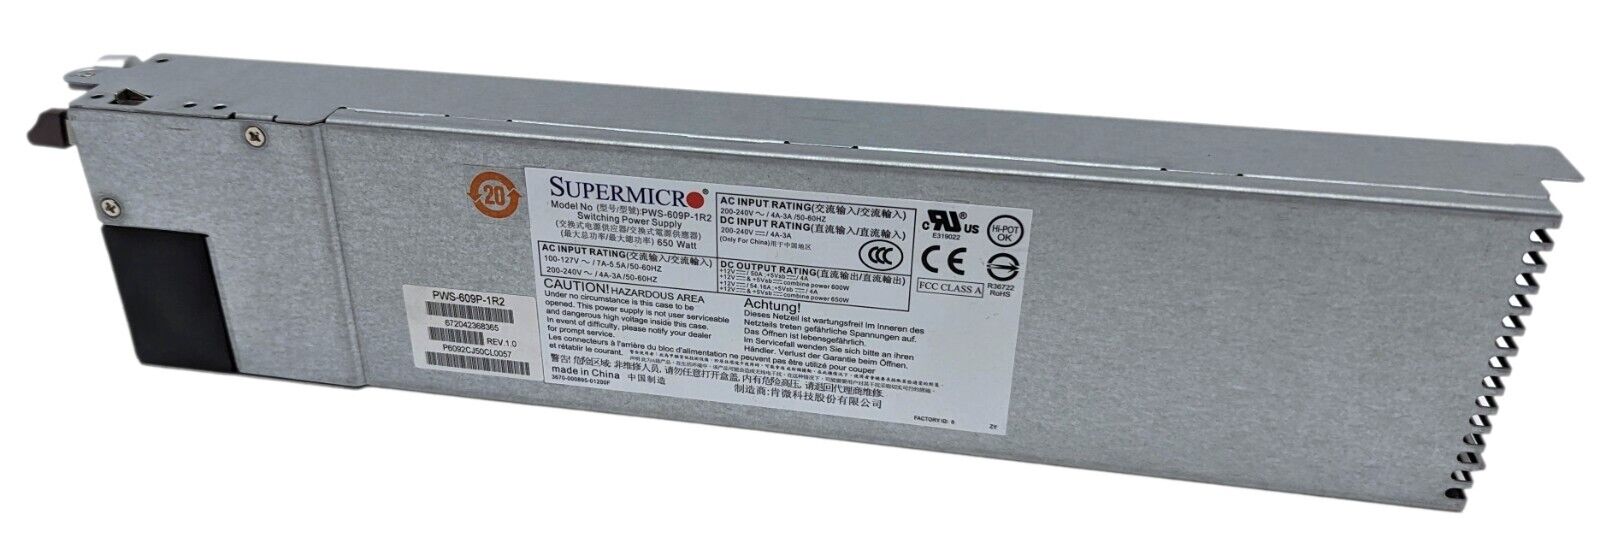 Supermicro PWS-609P-1R2 Redundant 1U 650W AC Switching Power Supply PSU - Tested